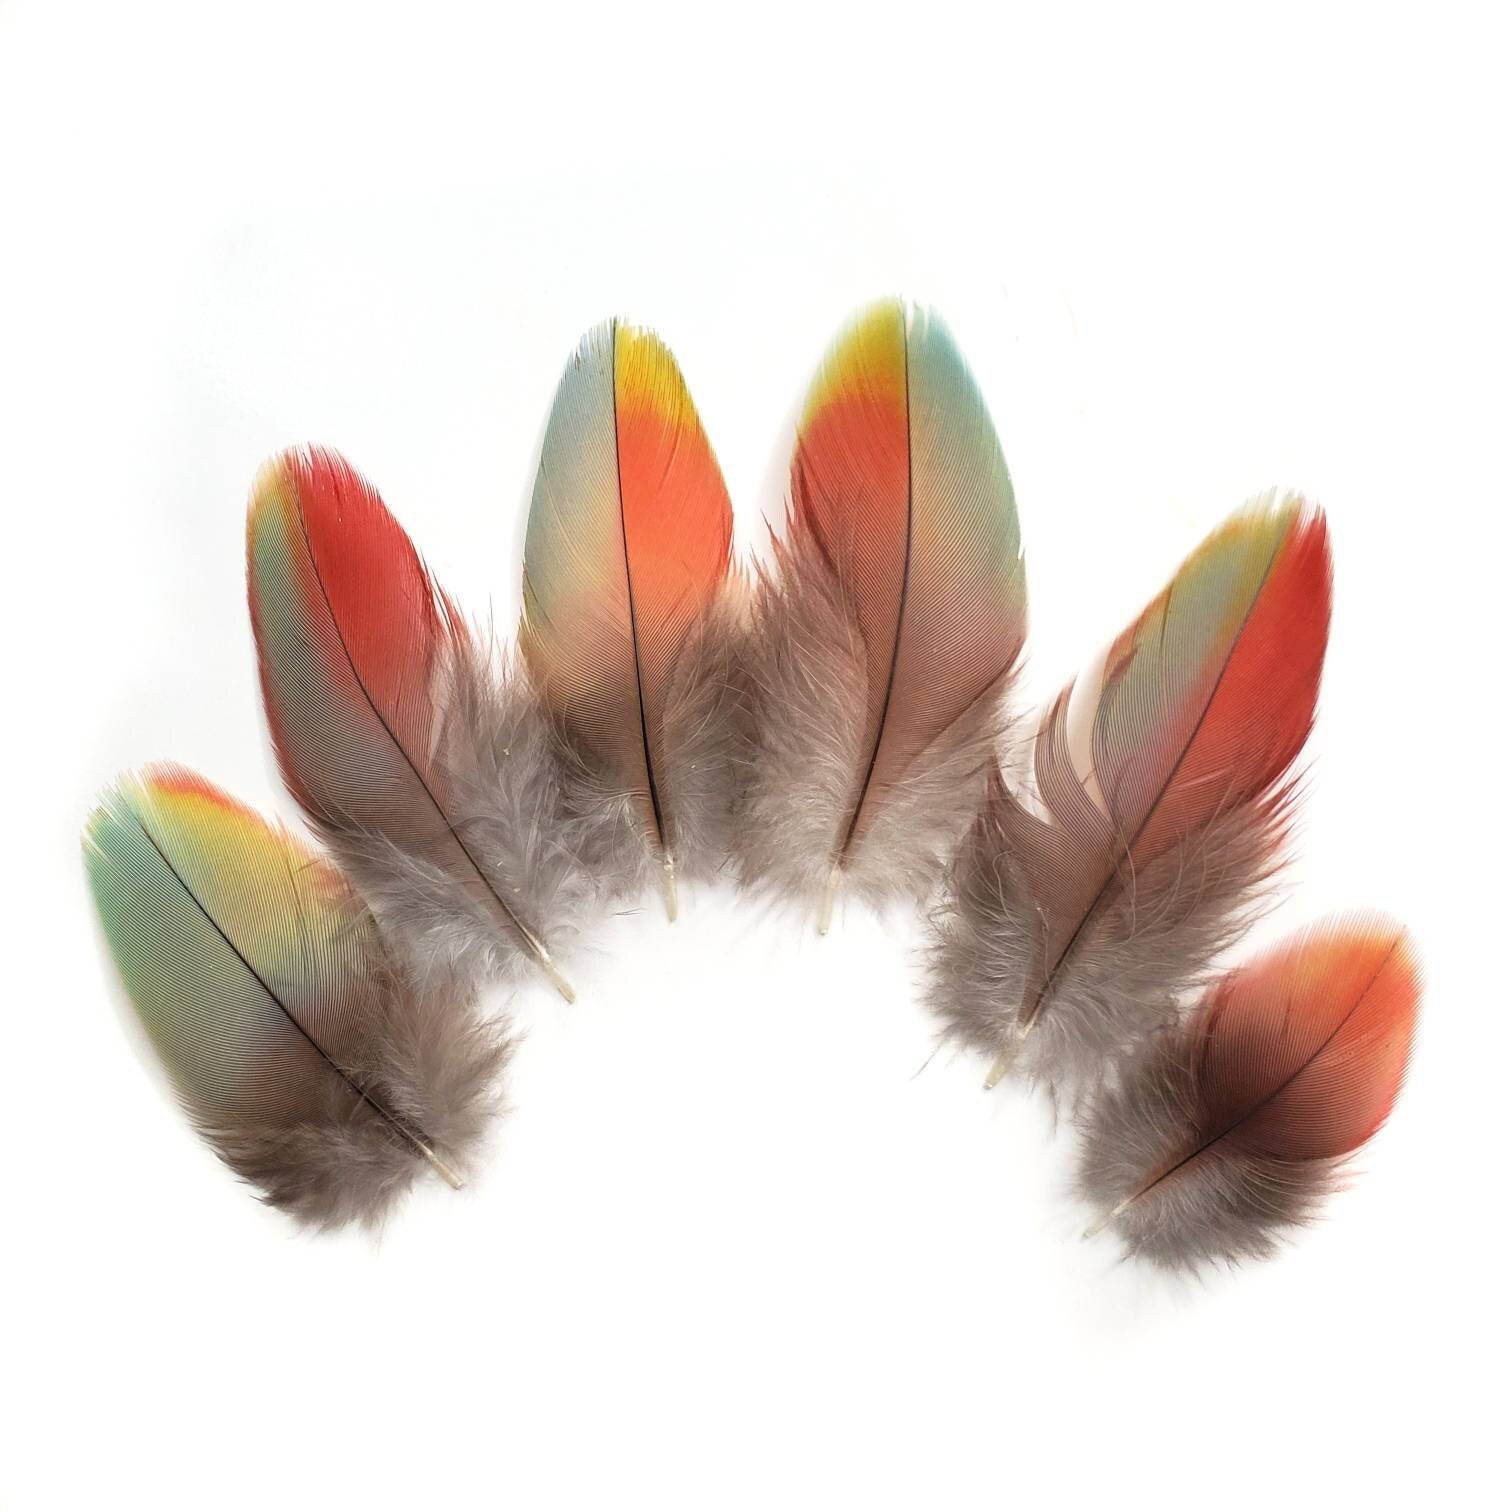 Peekaboo Dye Job Inspired by Red-Tailed Hawk Feathers